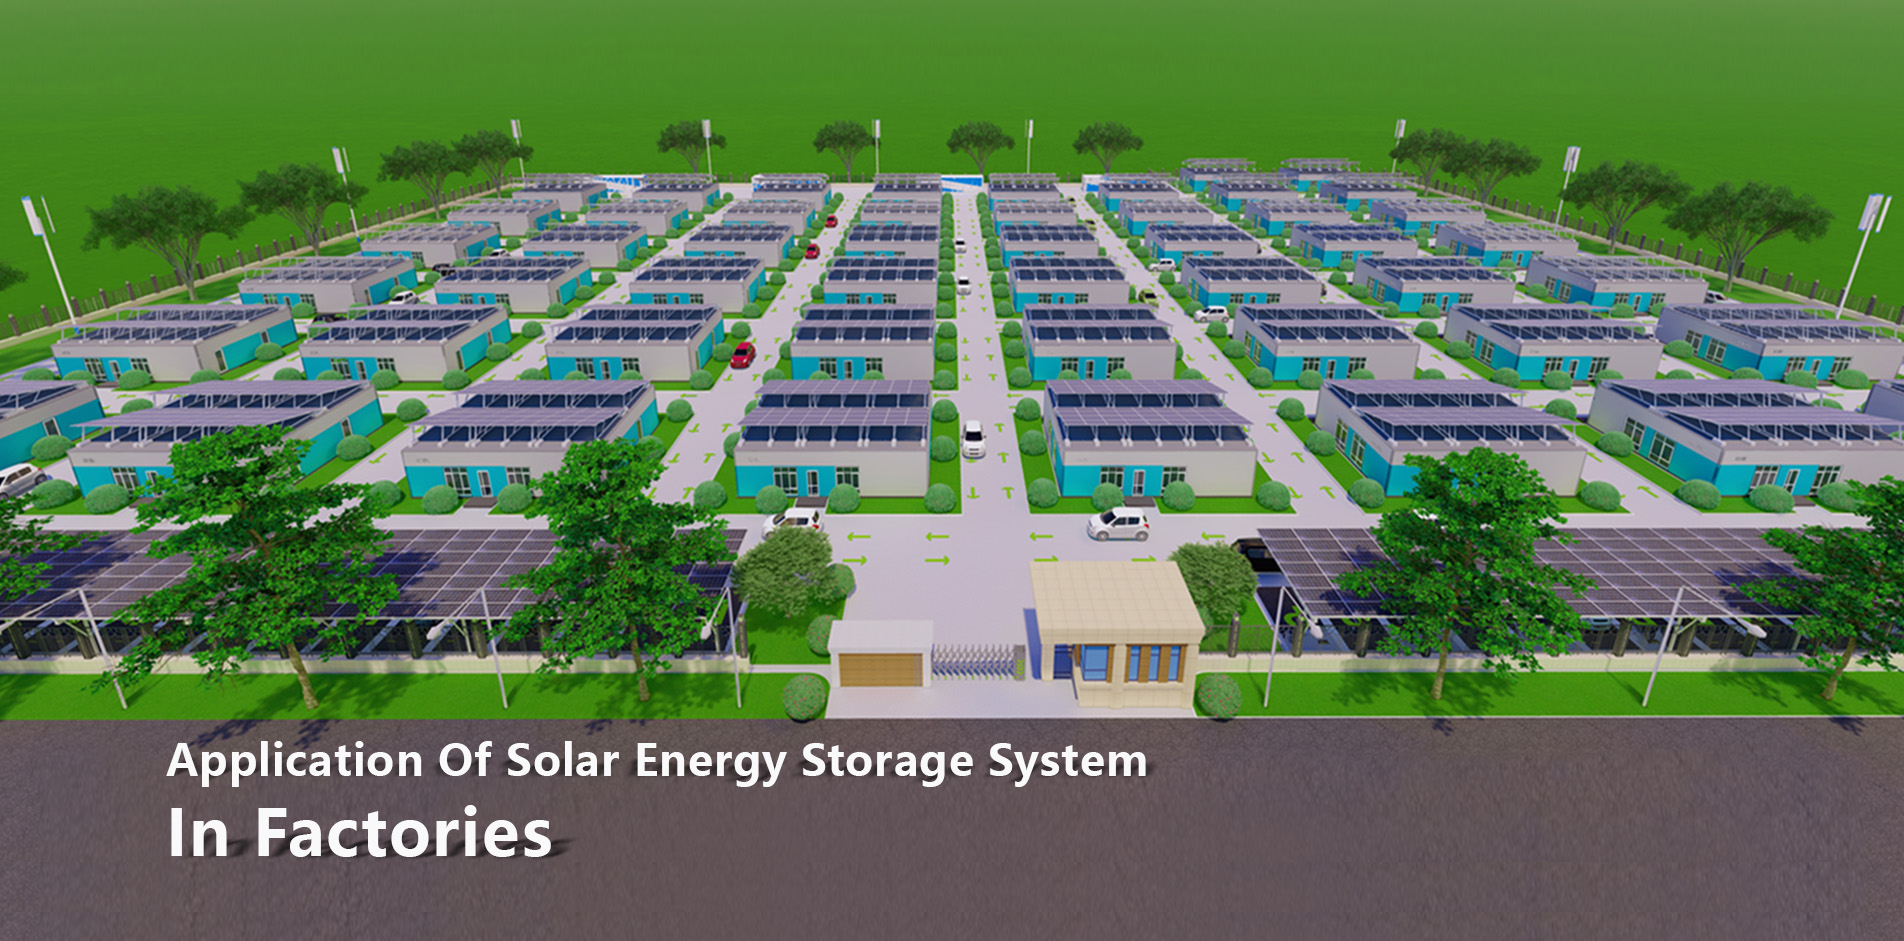 Solarenergiespeichersystem in Bergbaugebieten